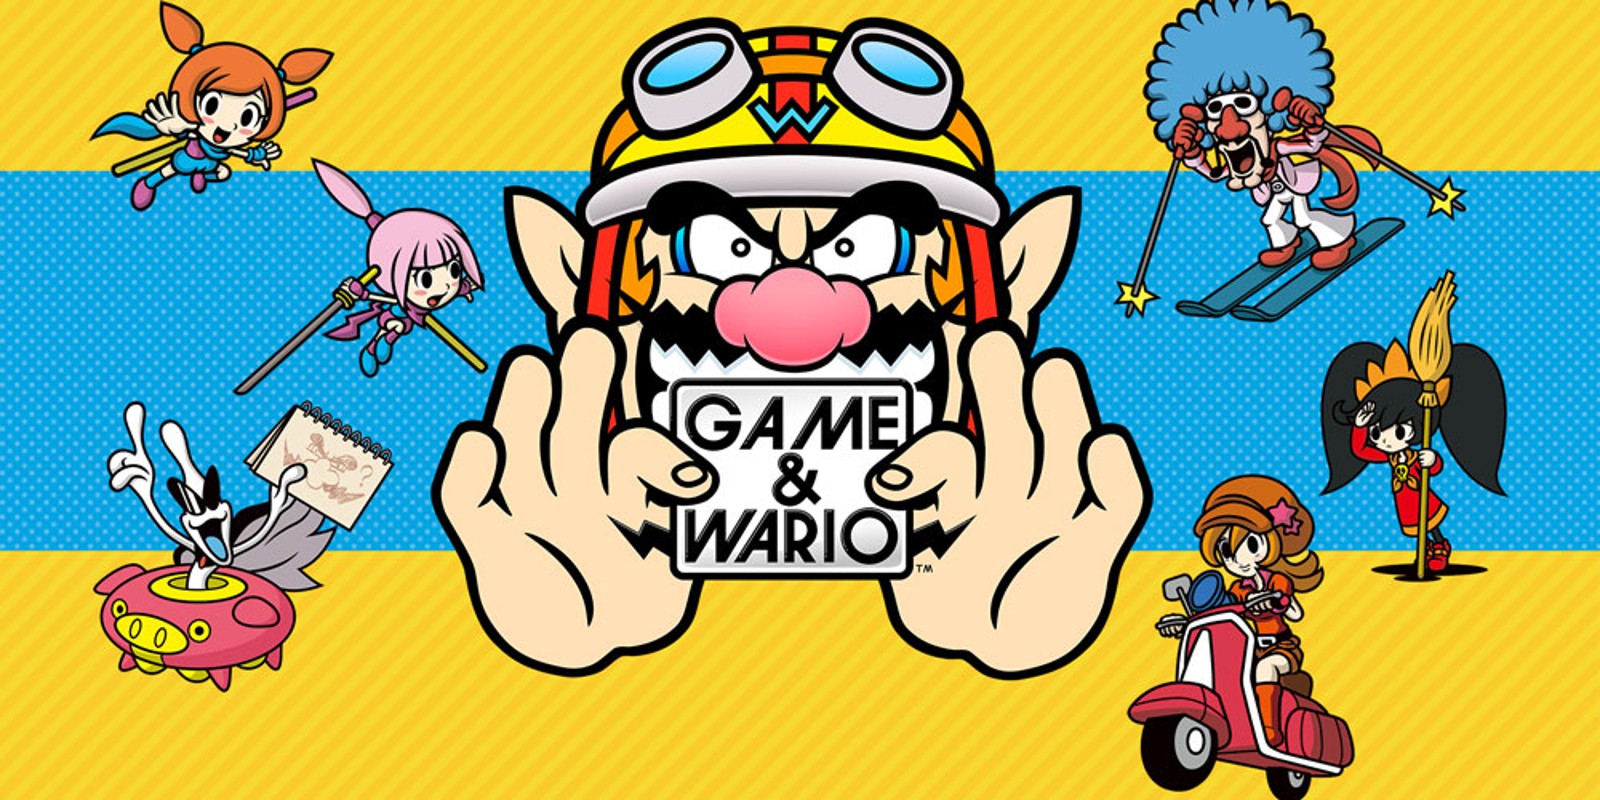 Game & Wario | Wii U | Games | Nintendo1600 x 800